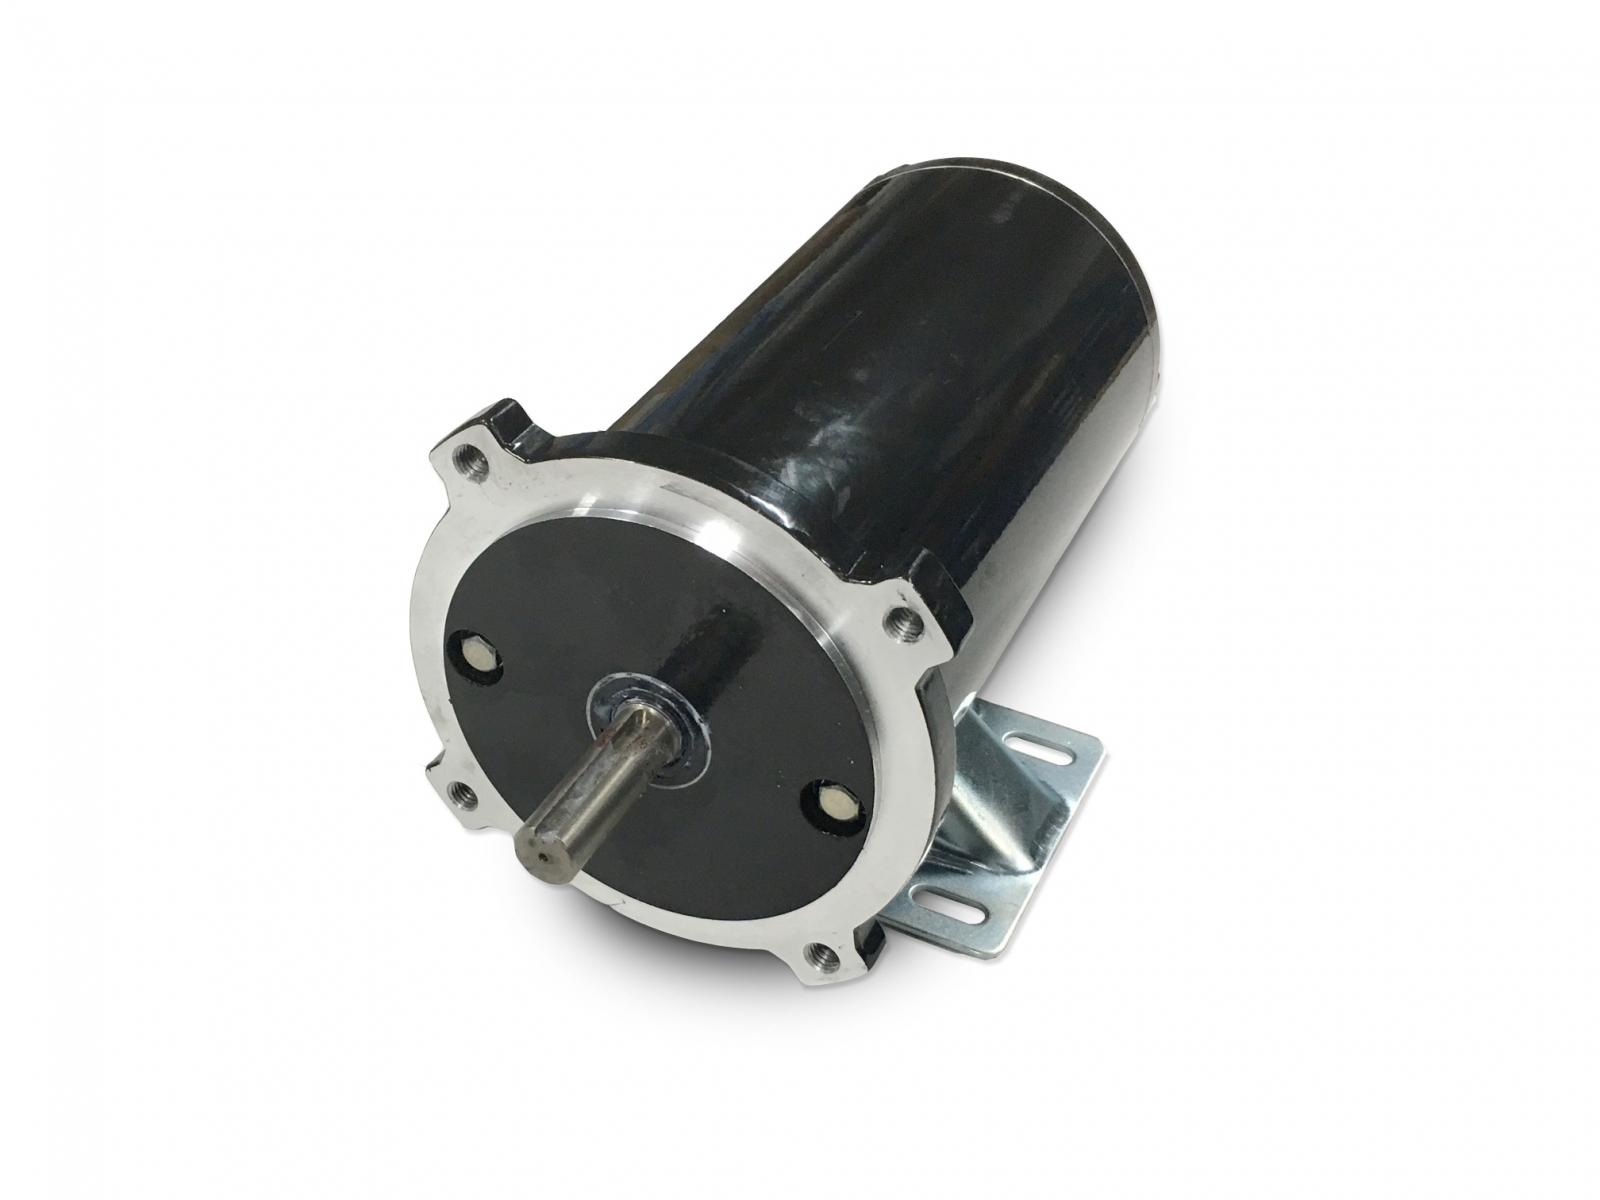 MaxxMotor 50077 Sno-Way V-Box Electric Salt Spreader Auger Motor With Key Way Shaft - 24V